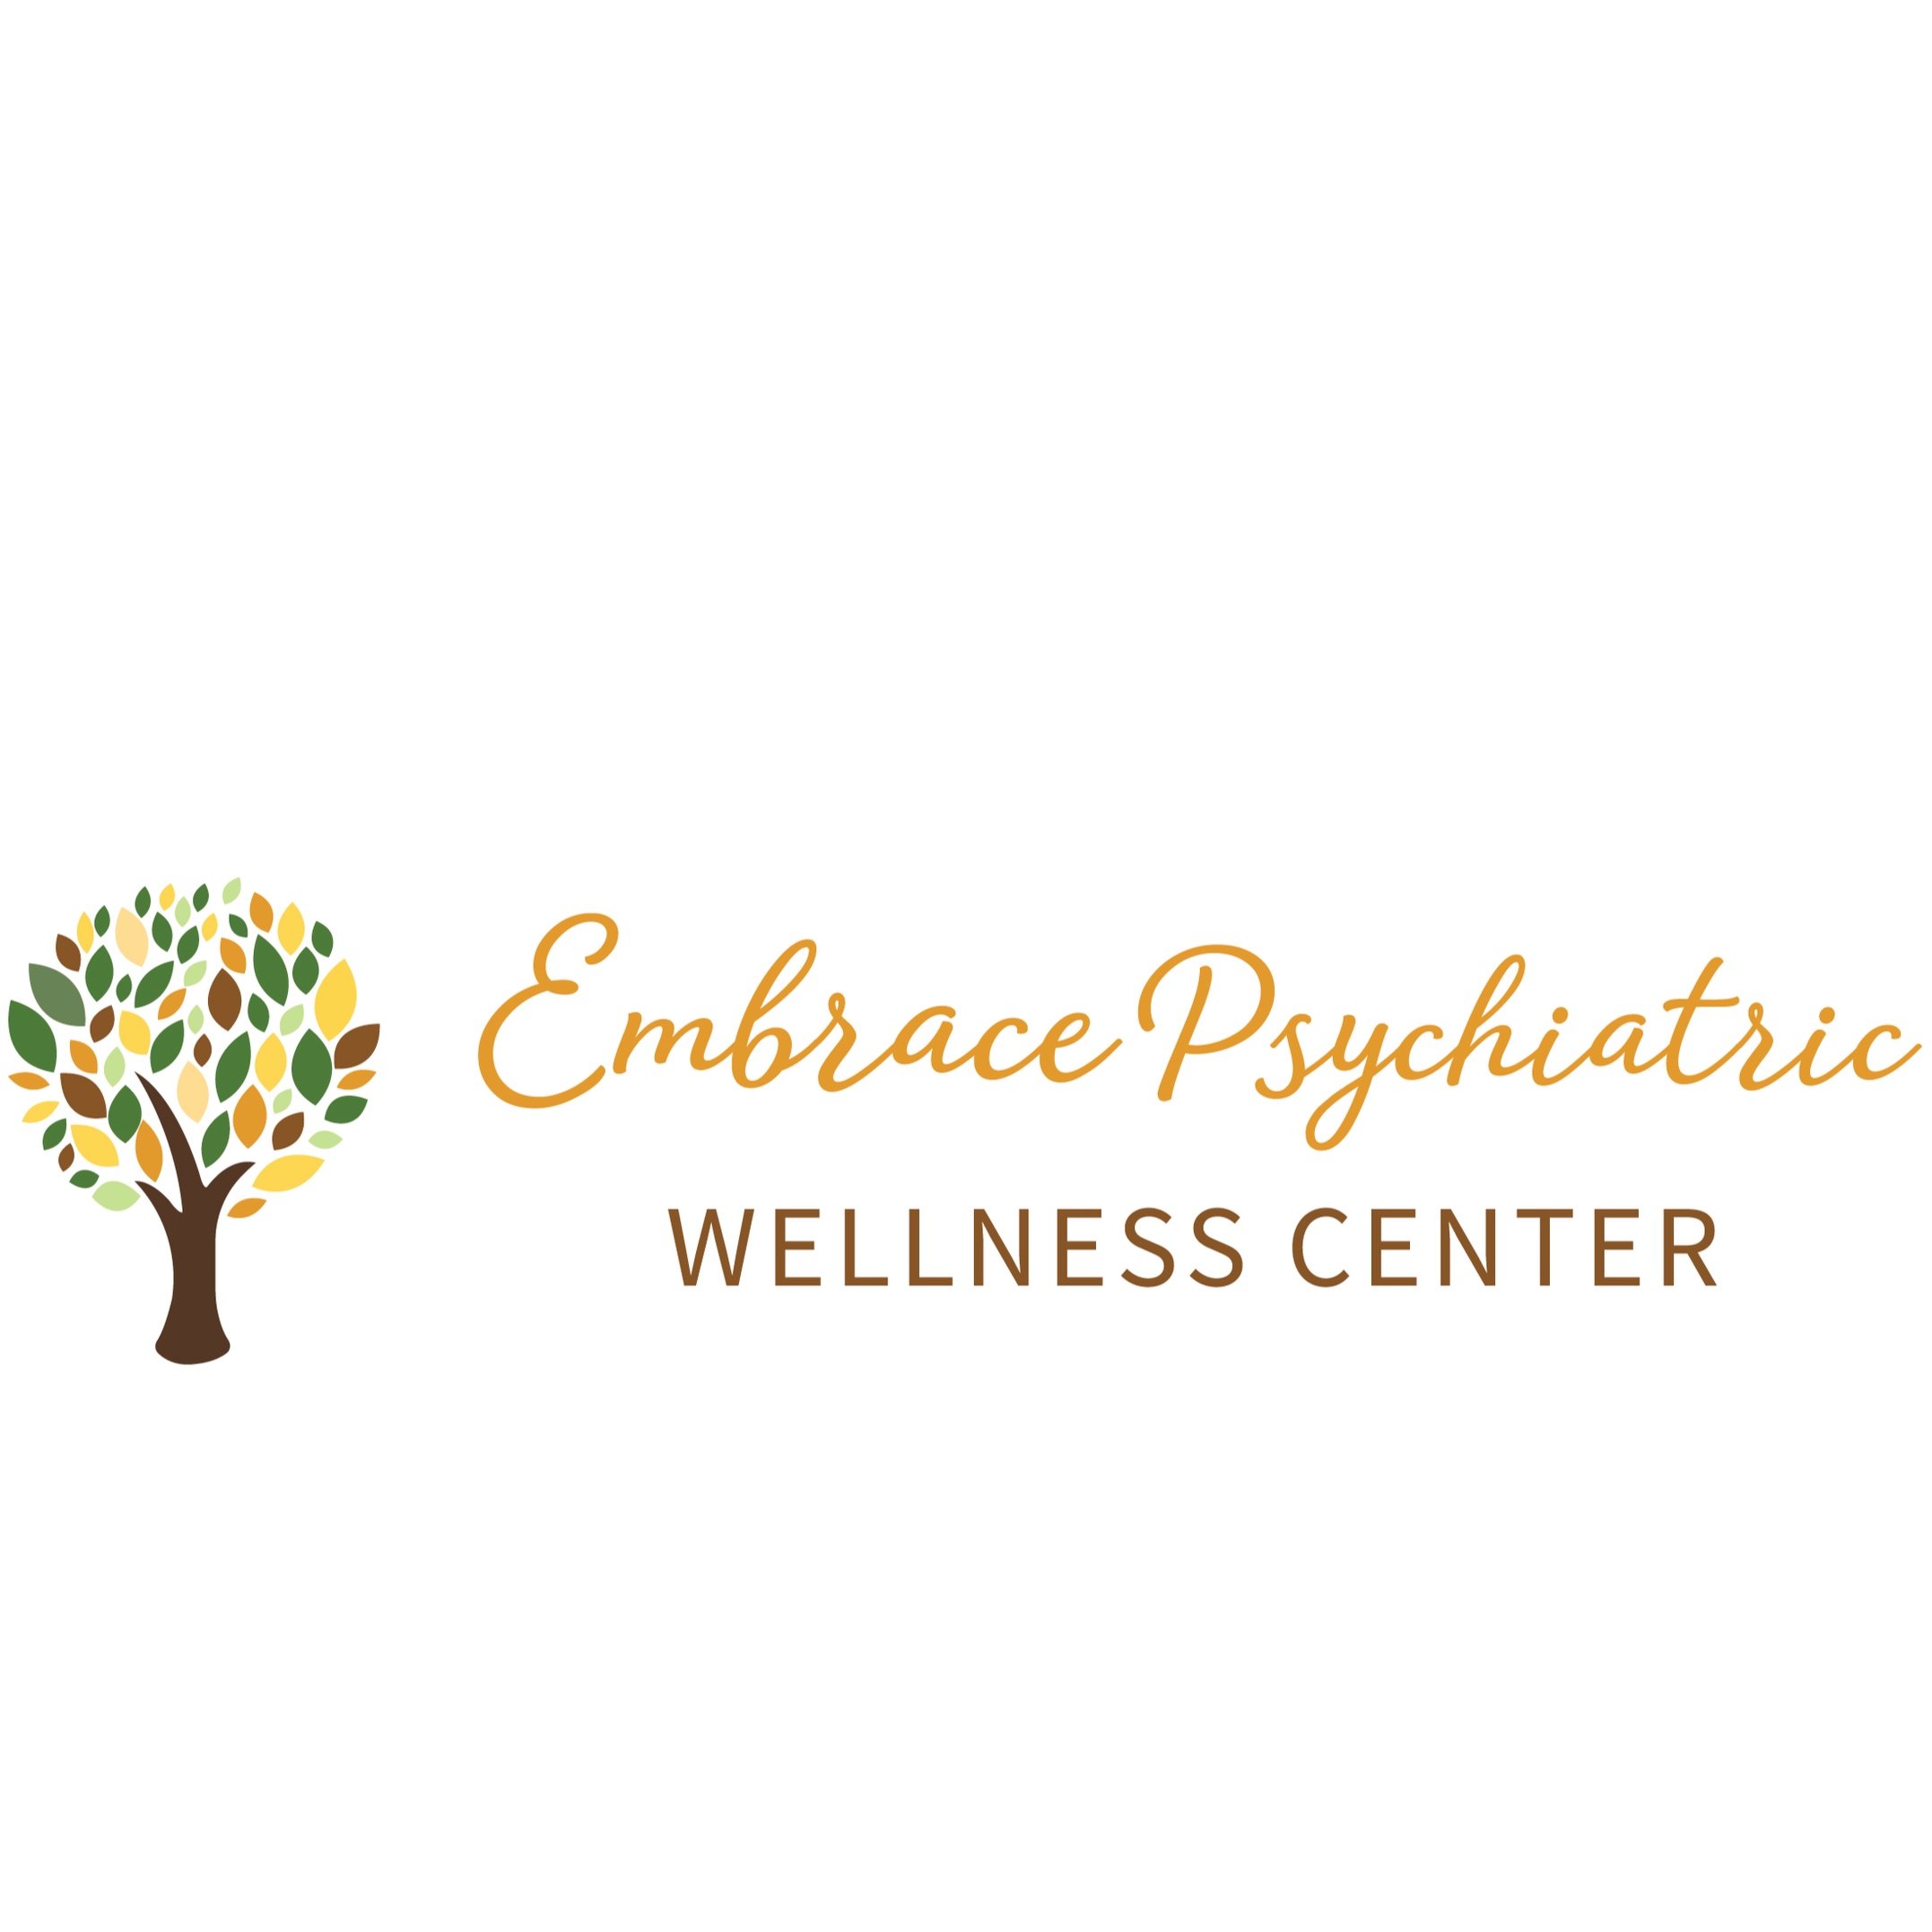 Embrace Psychiatric Wellness Center